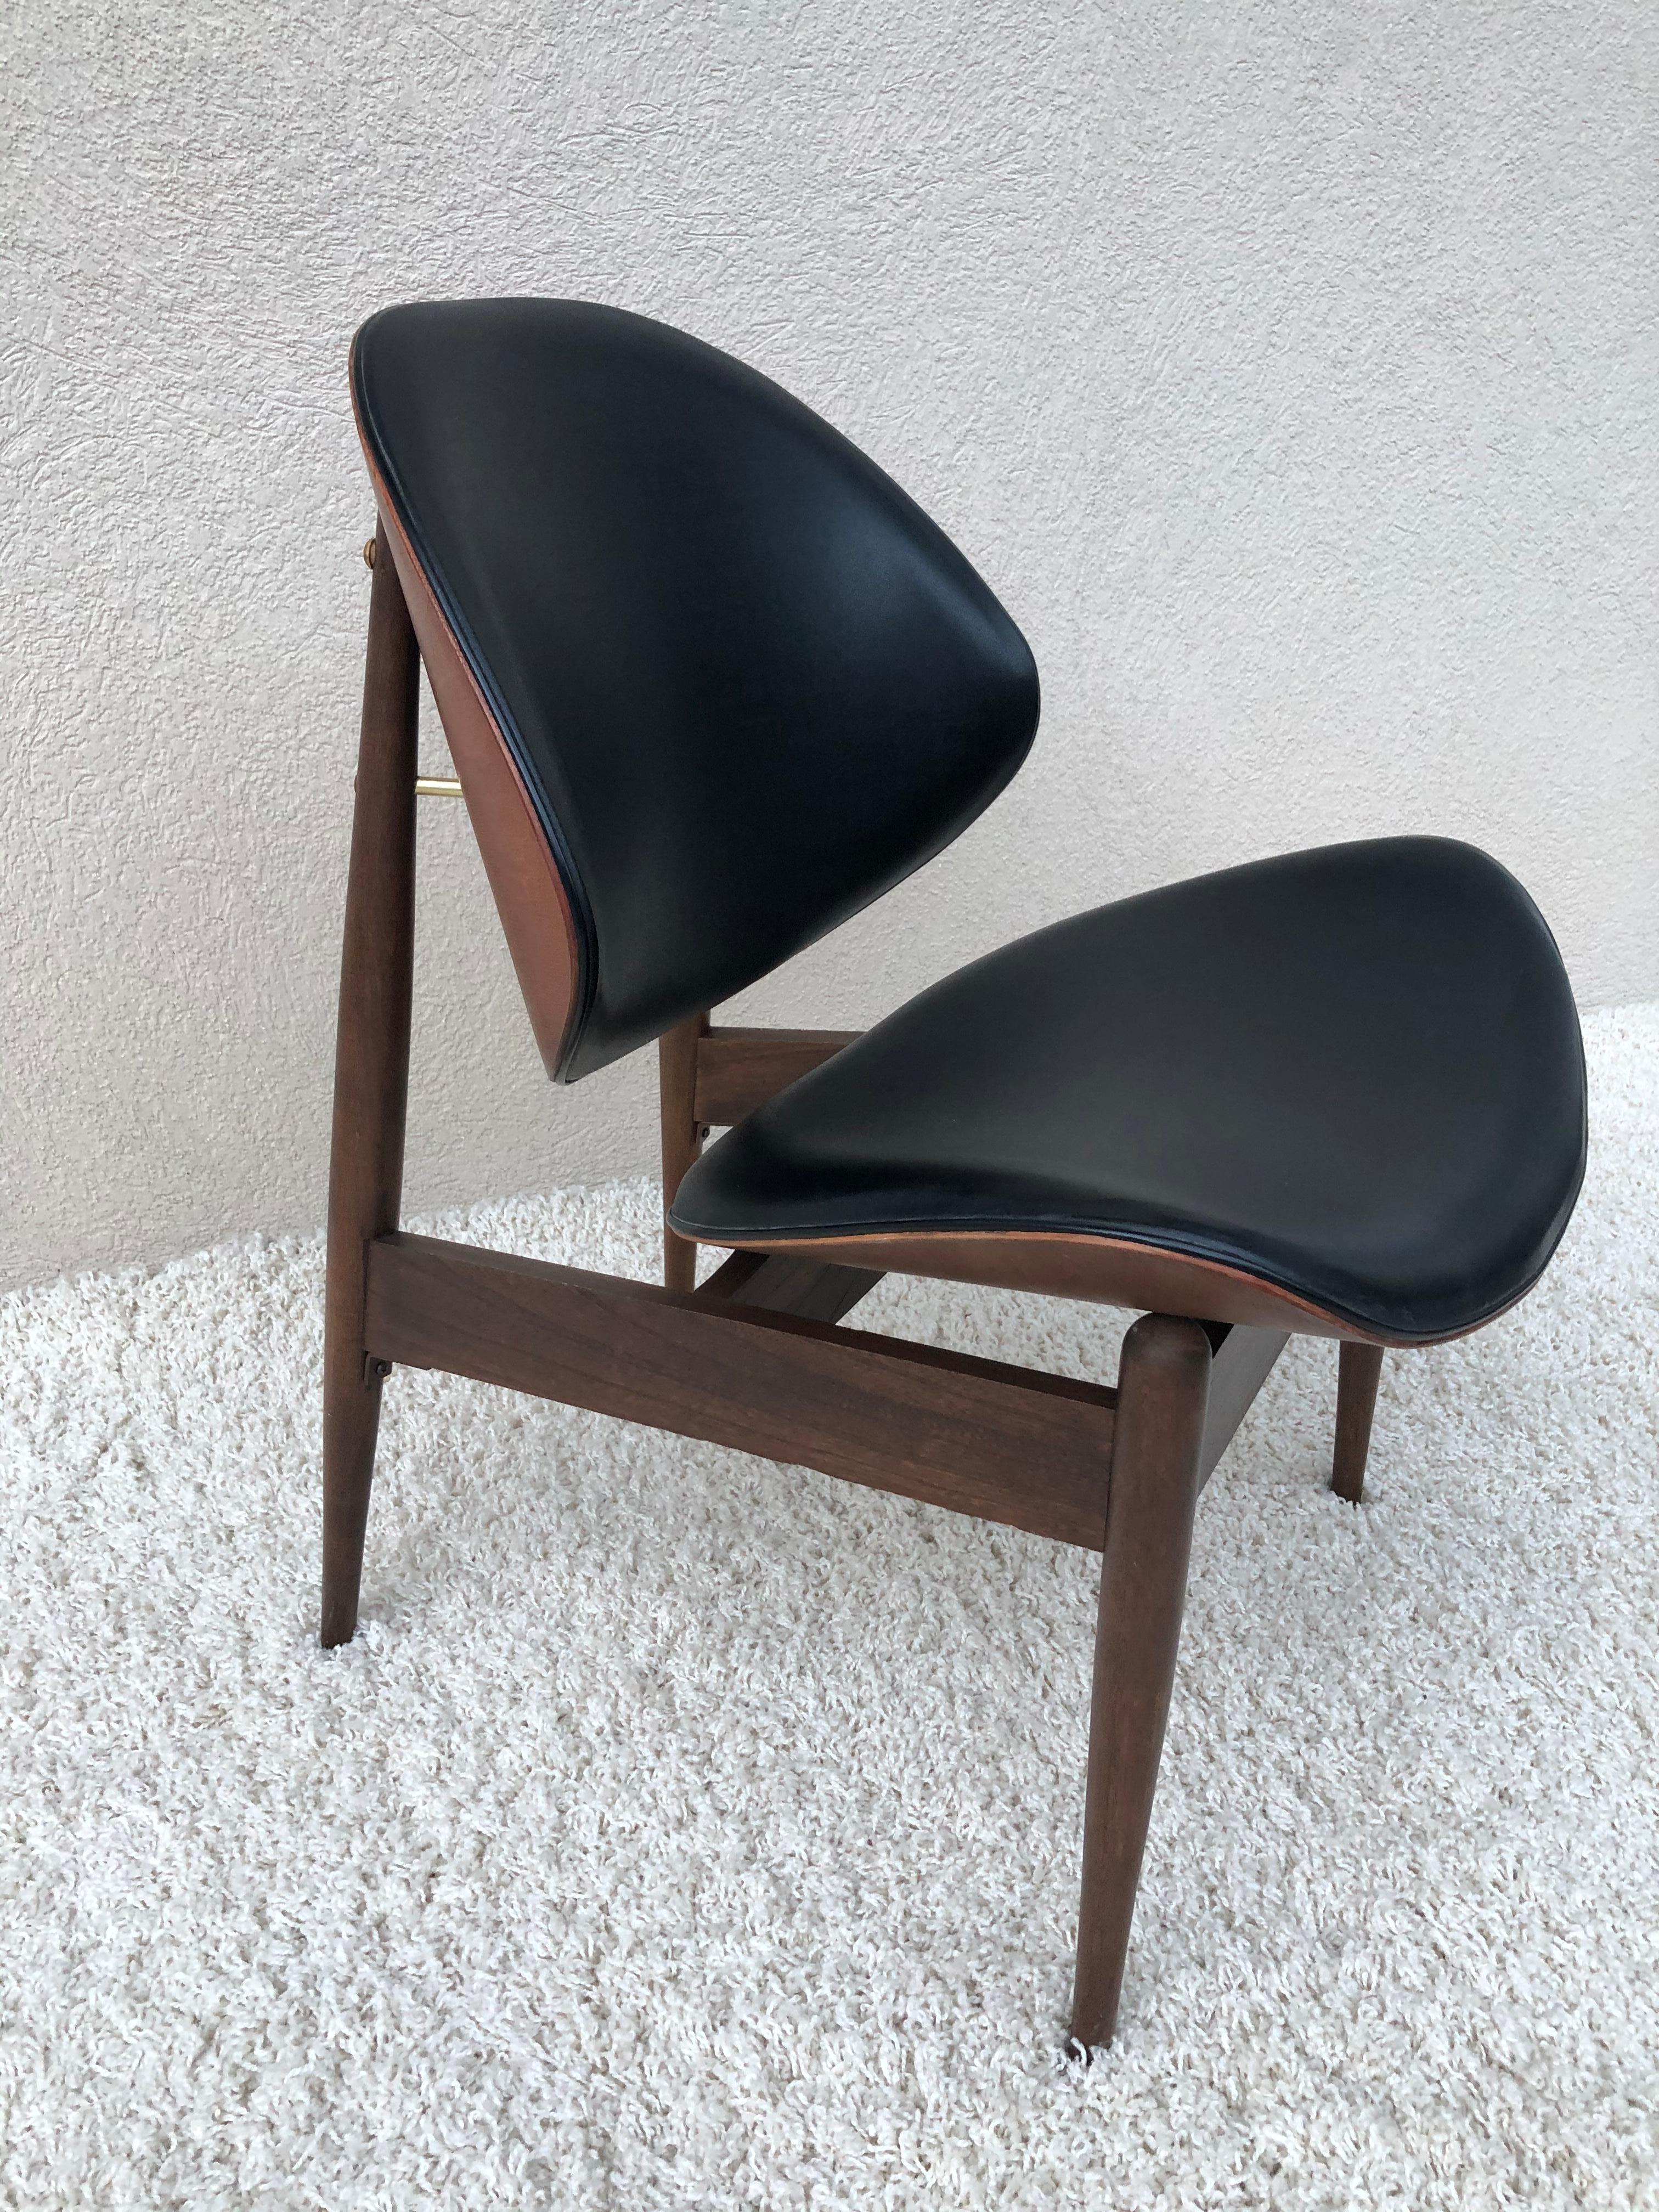 Mid-Century Modern Frank and Son Finn Juhl Style Midcentury Chair